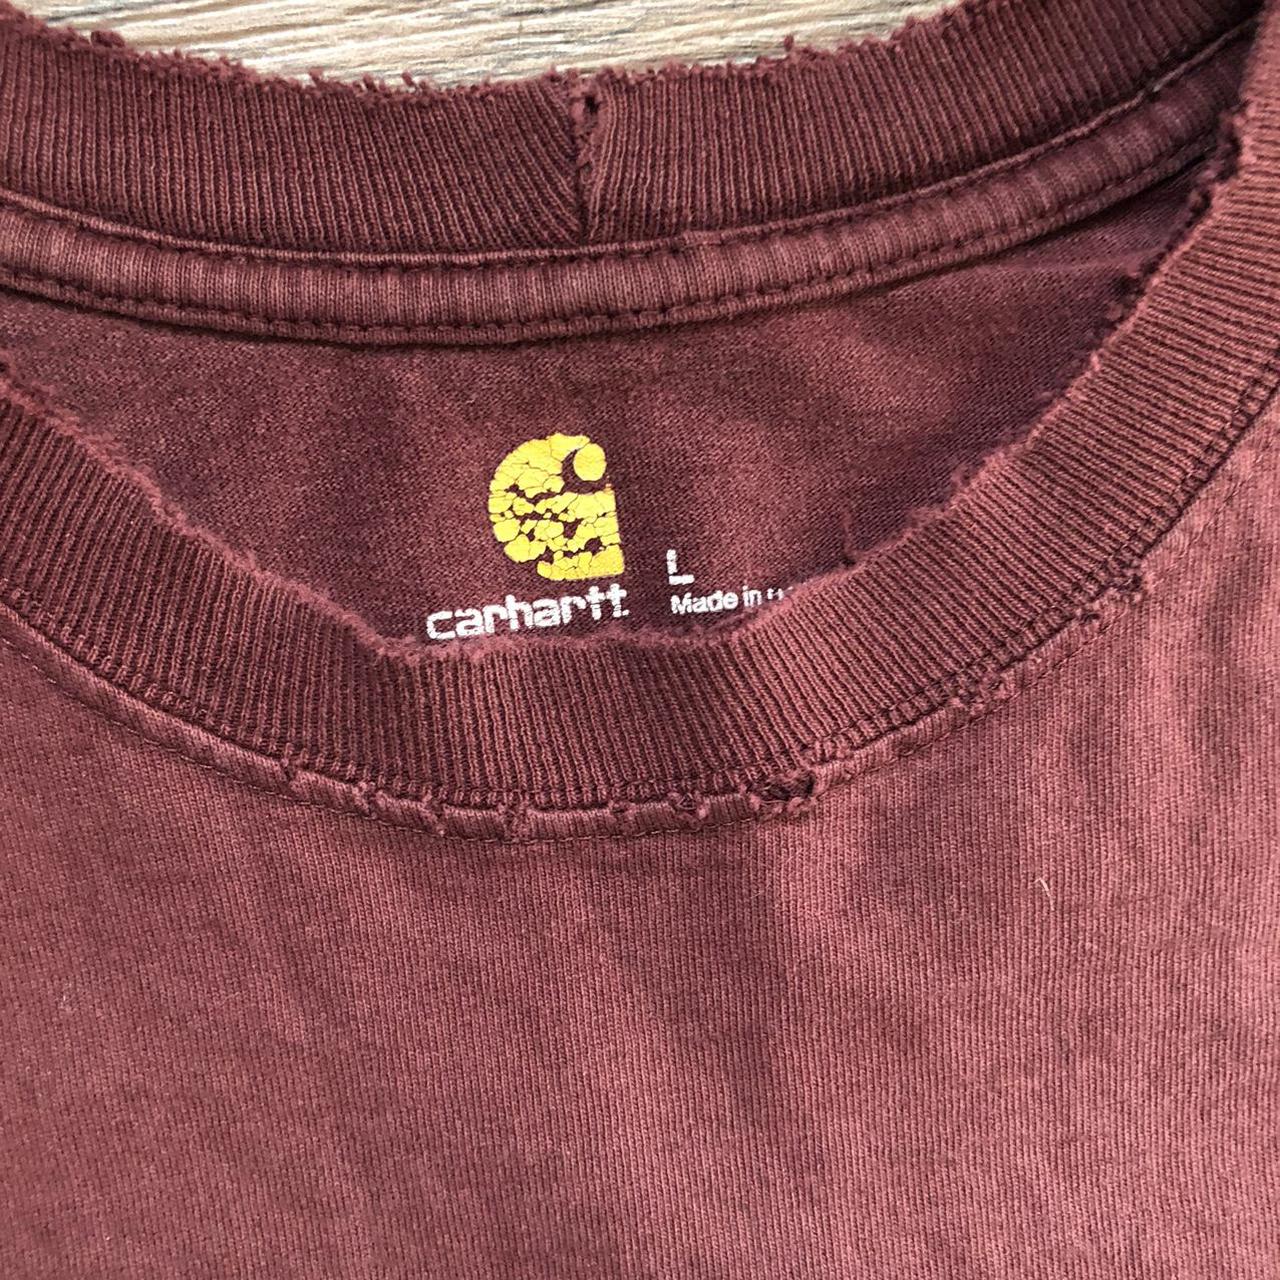 Product Image 3 - 🔥🚧CARHARTT SHIRT🚧🔥
-Nicely worn/distressed Carhartt shirt
-Burgundy/maroon